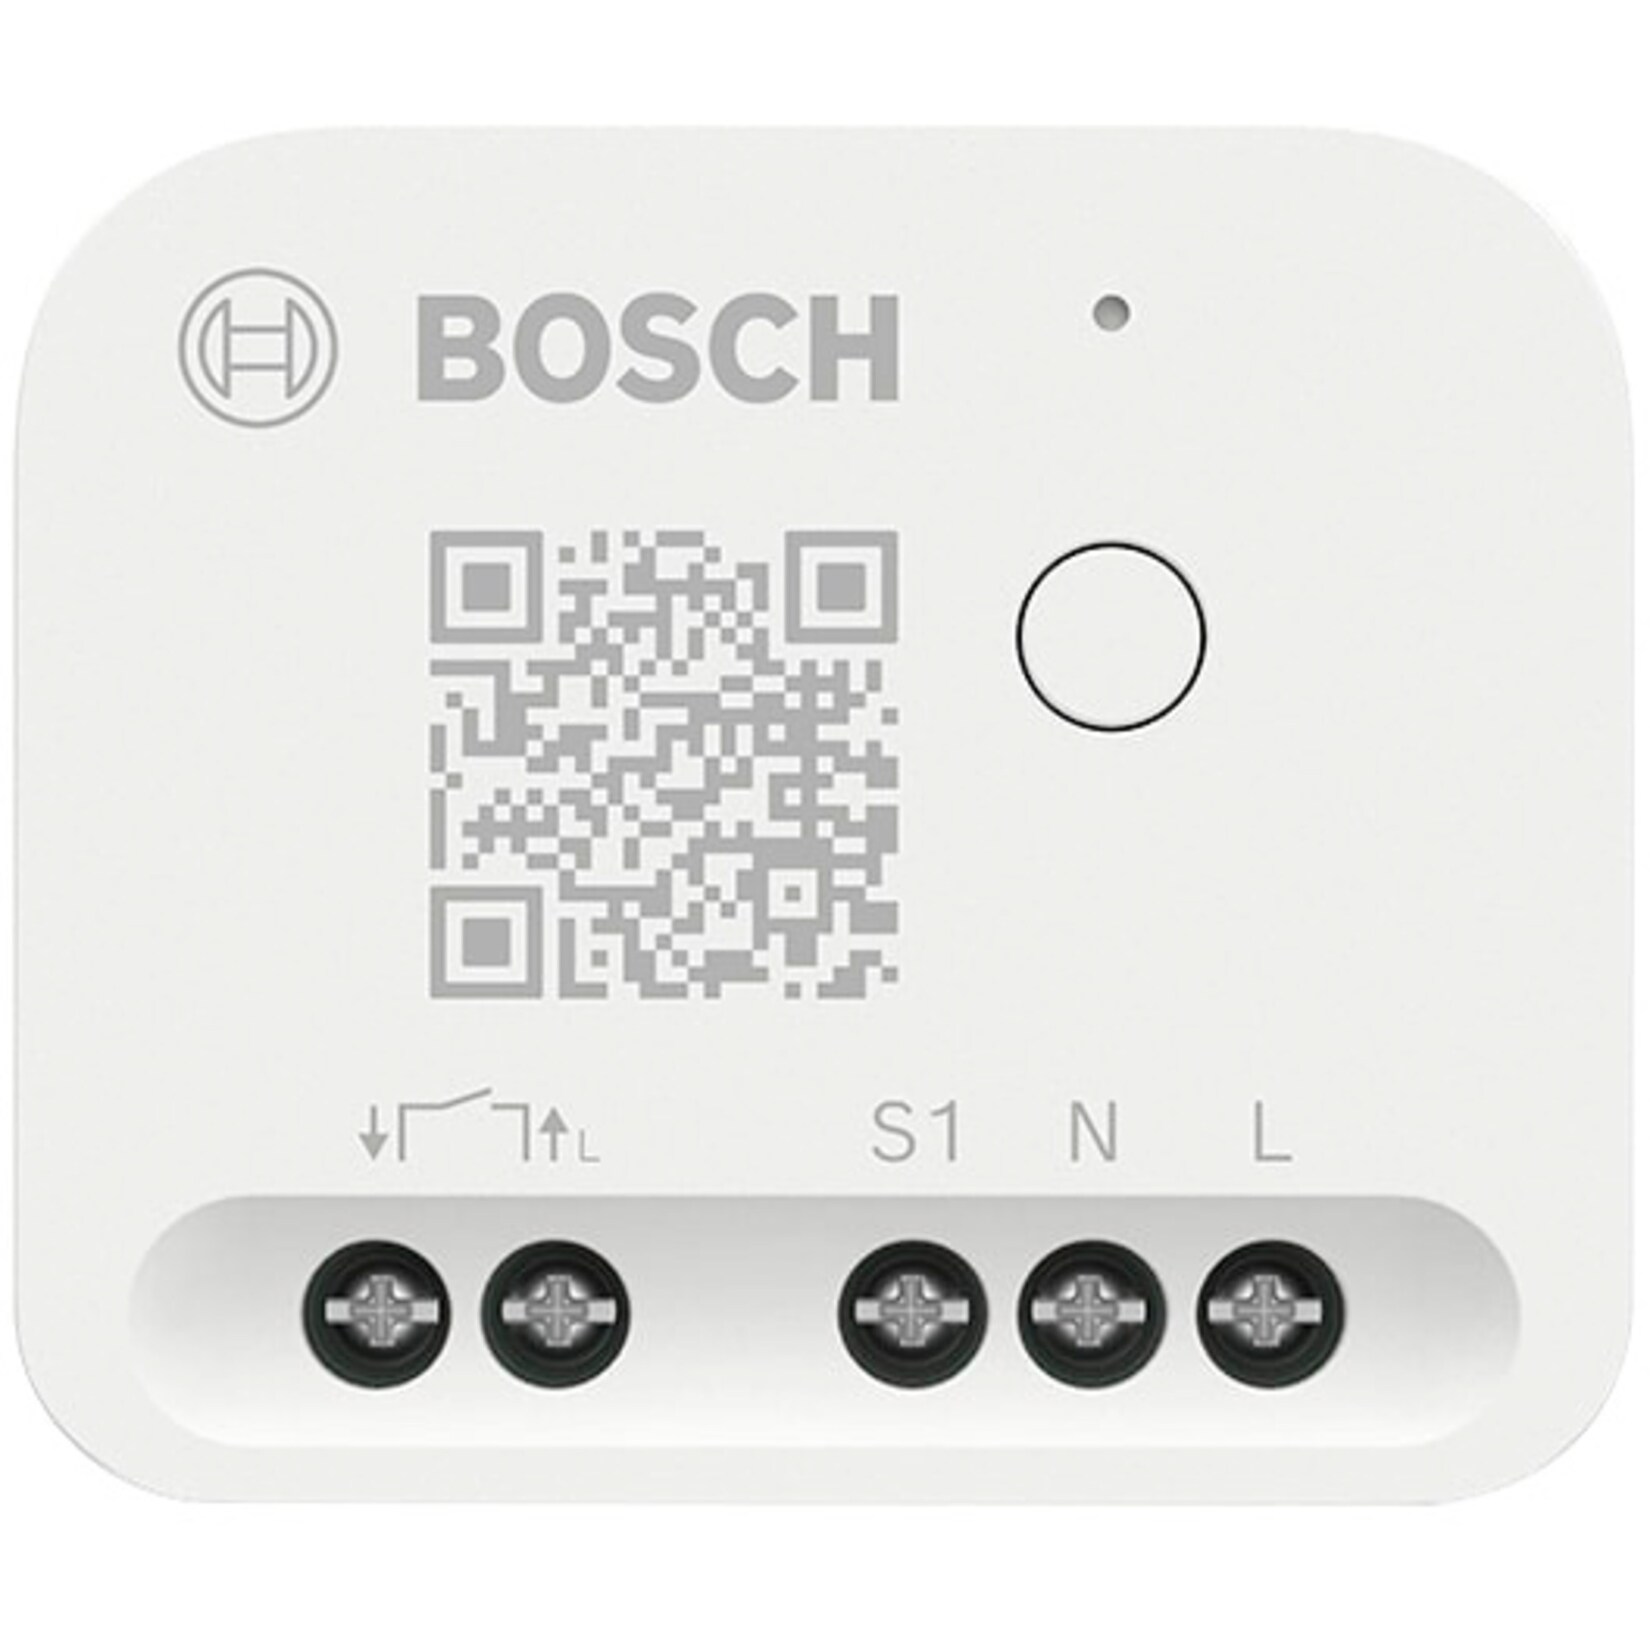 Bosch Relais Smart Home Relais